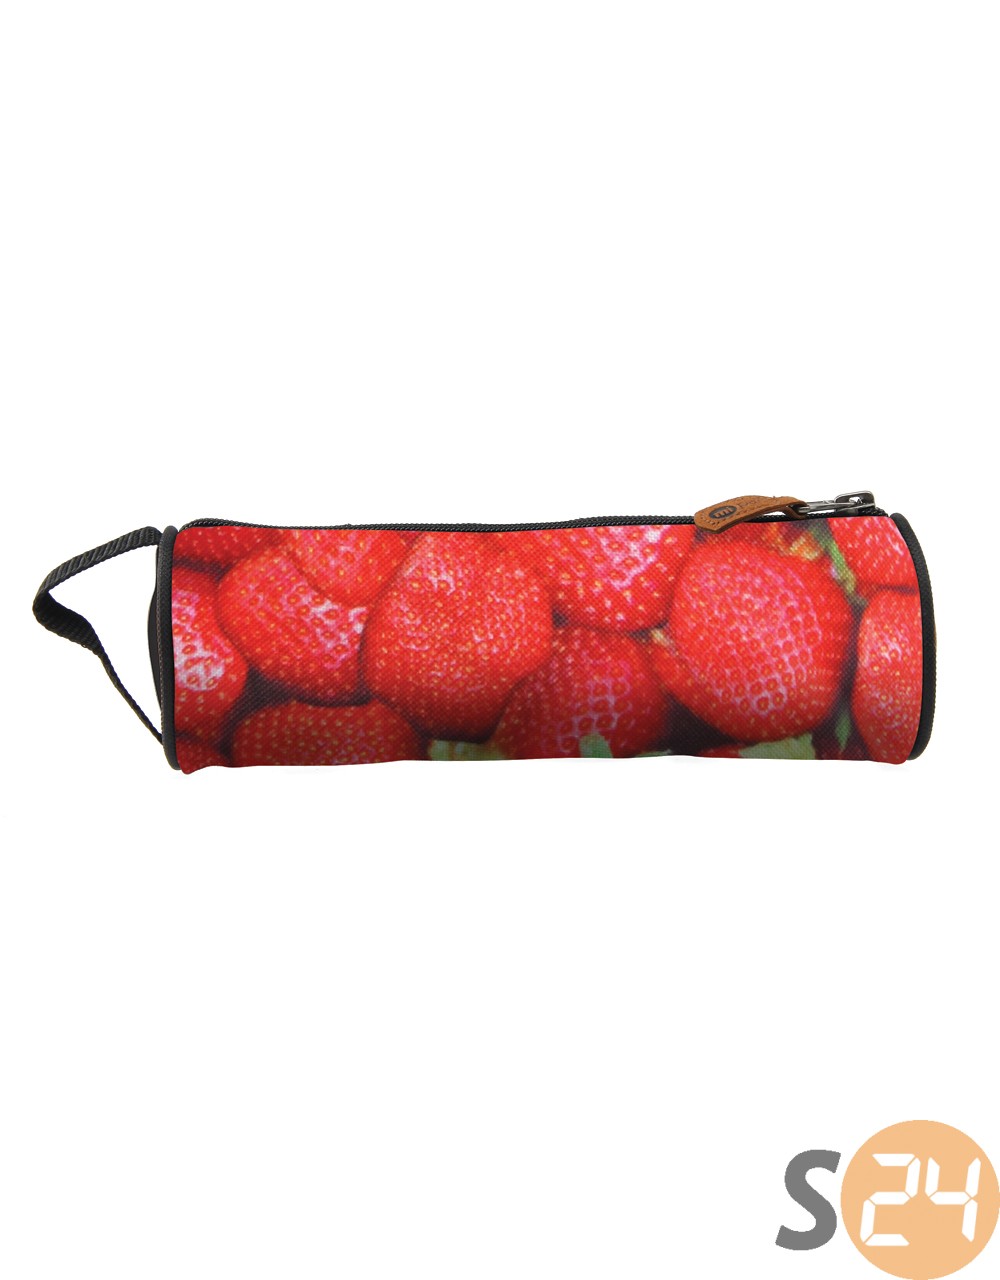 Mipac  Mi-pac pencil case strawberry red 740561-313